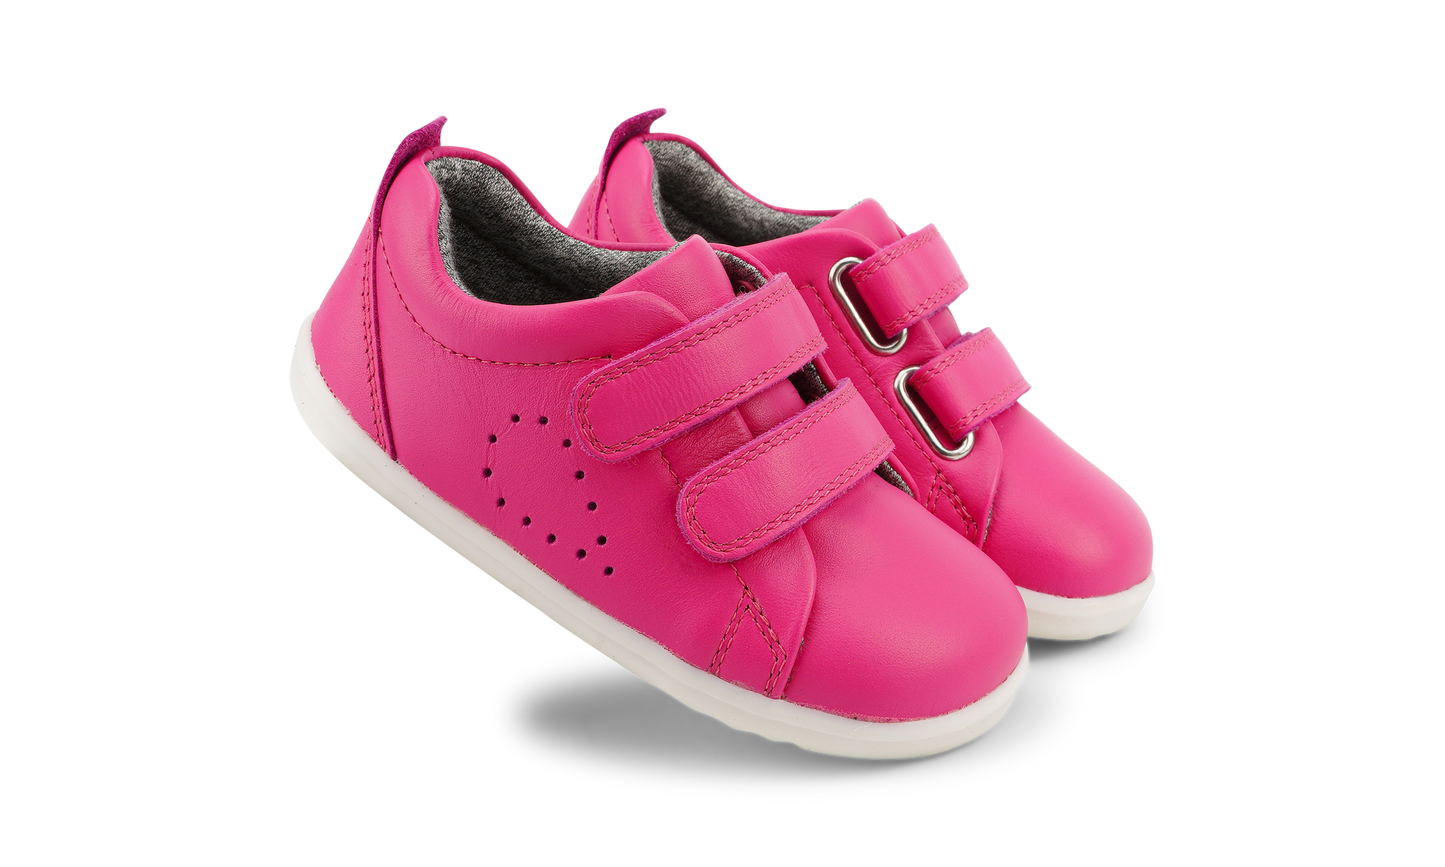 SU Grass Court Shoe in Fuchsia Pink